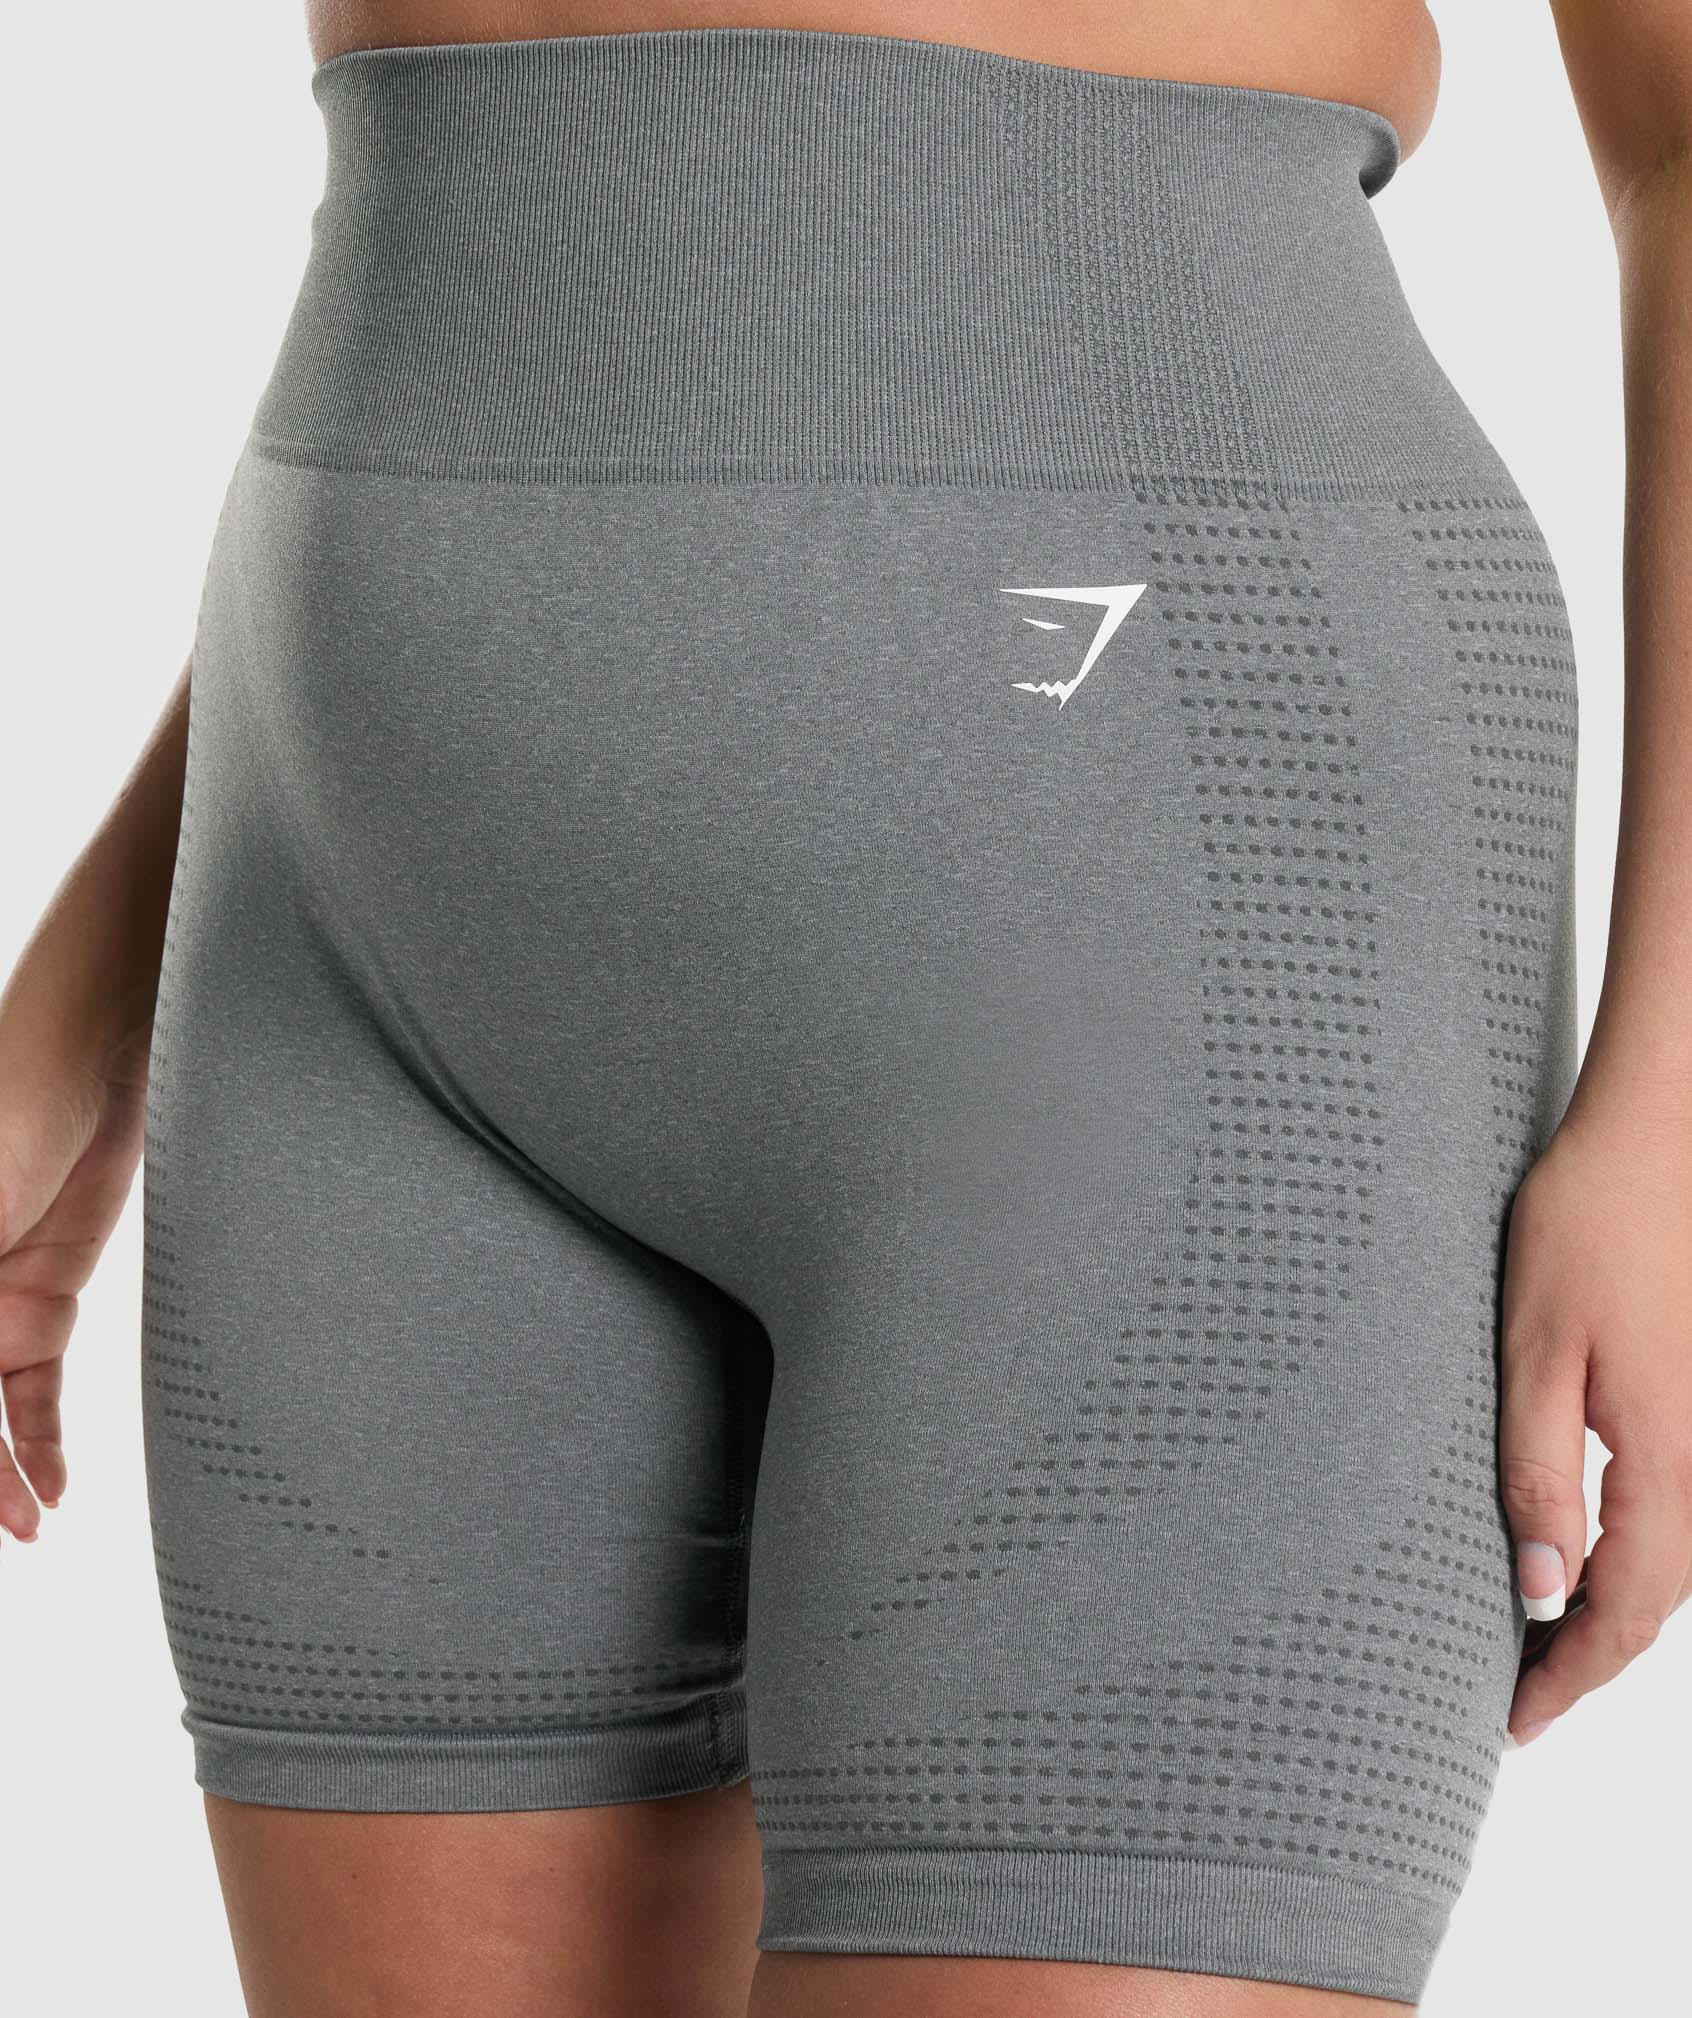 Gymshark Vital Seamless Shorts Gray - $30 - From Ashley